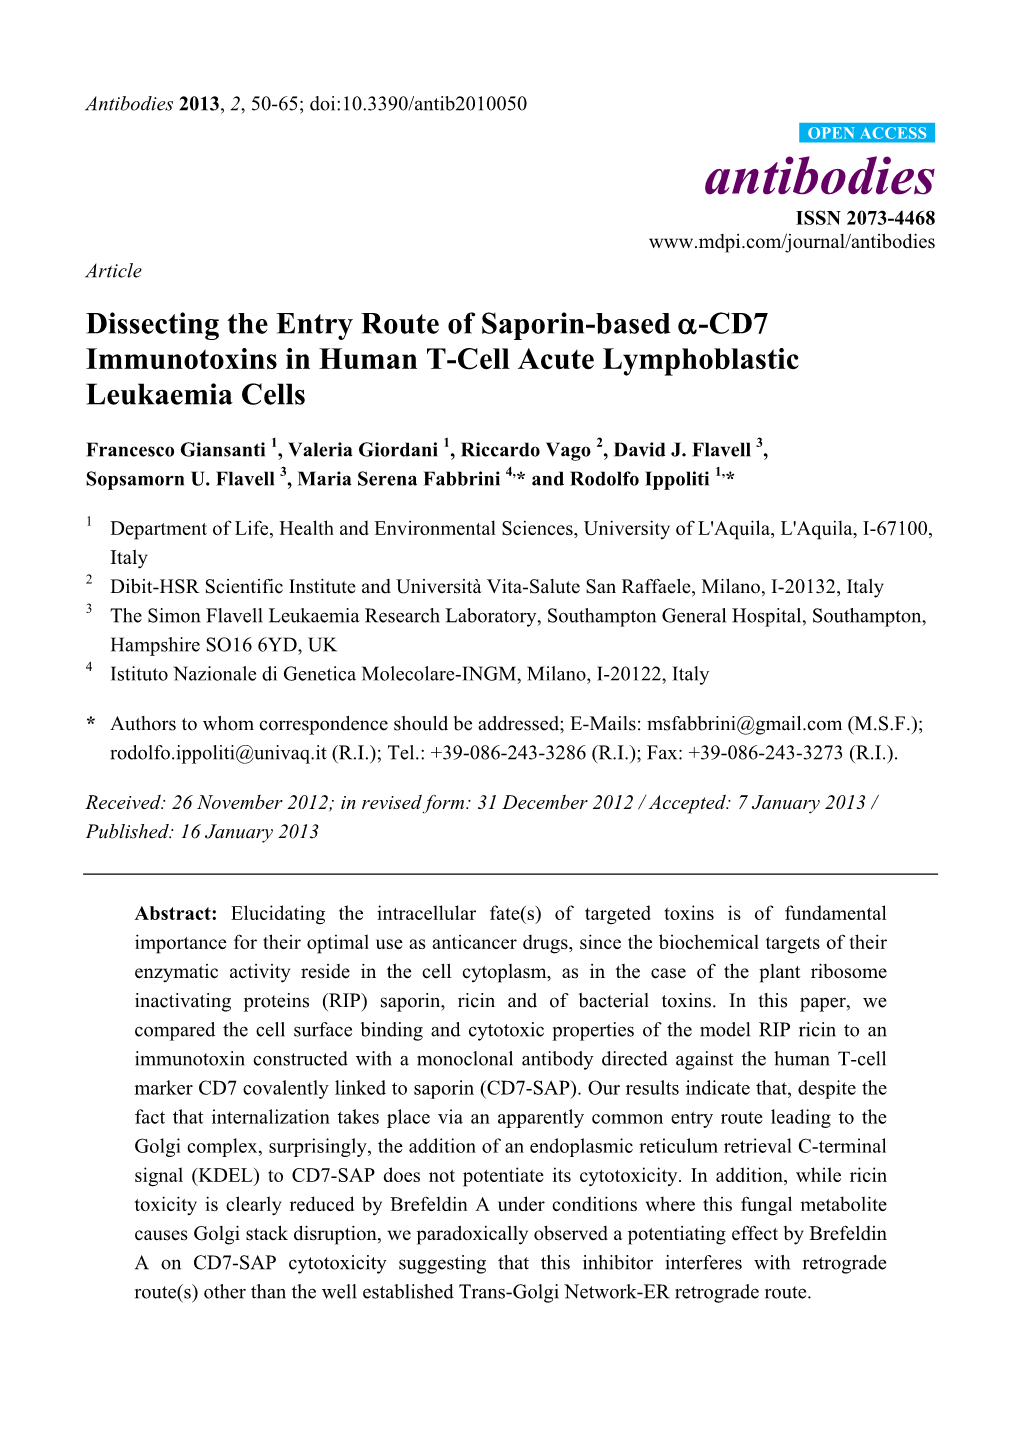 CD7 Immunotoxins in Human T-Cell Acute Lymphoblastic Leukaemia Cells